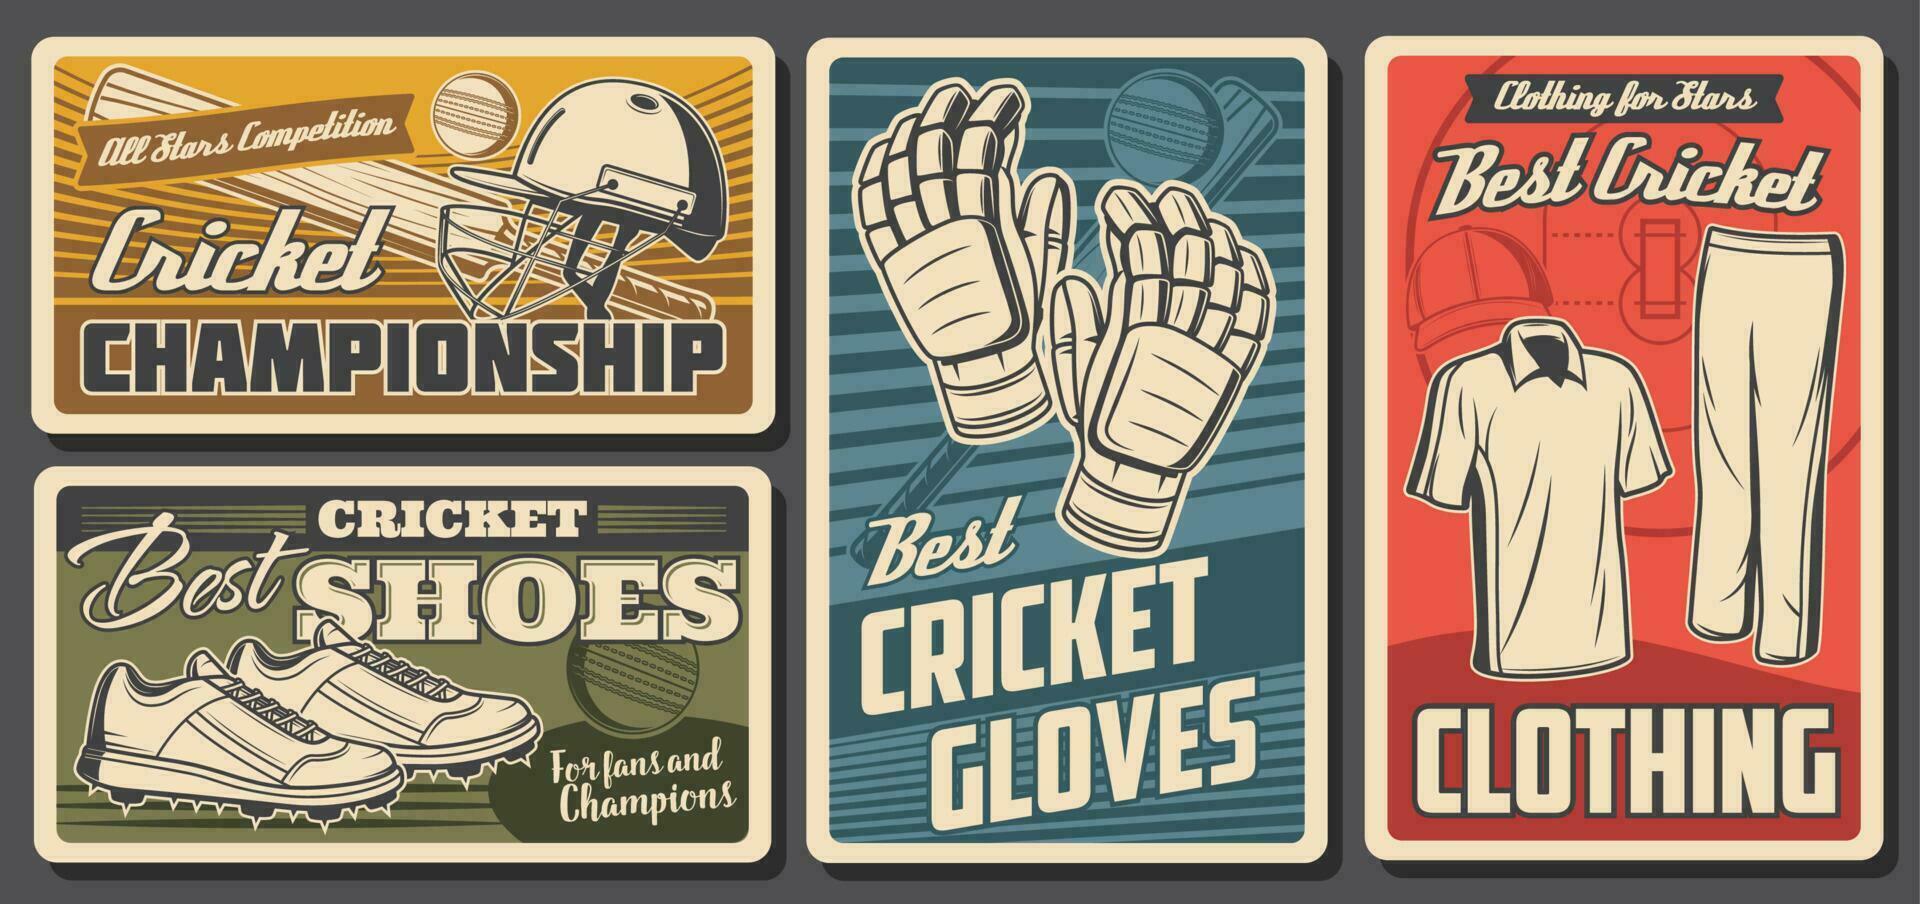 Cricket equipment and uniform, vector banners set